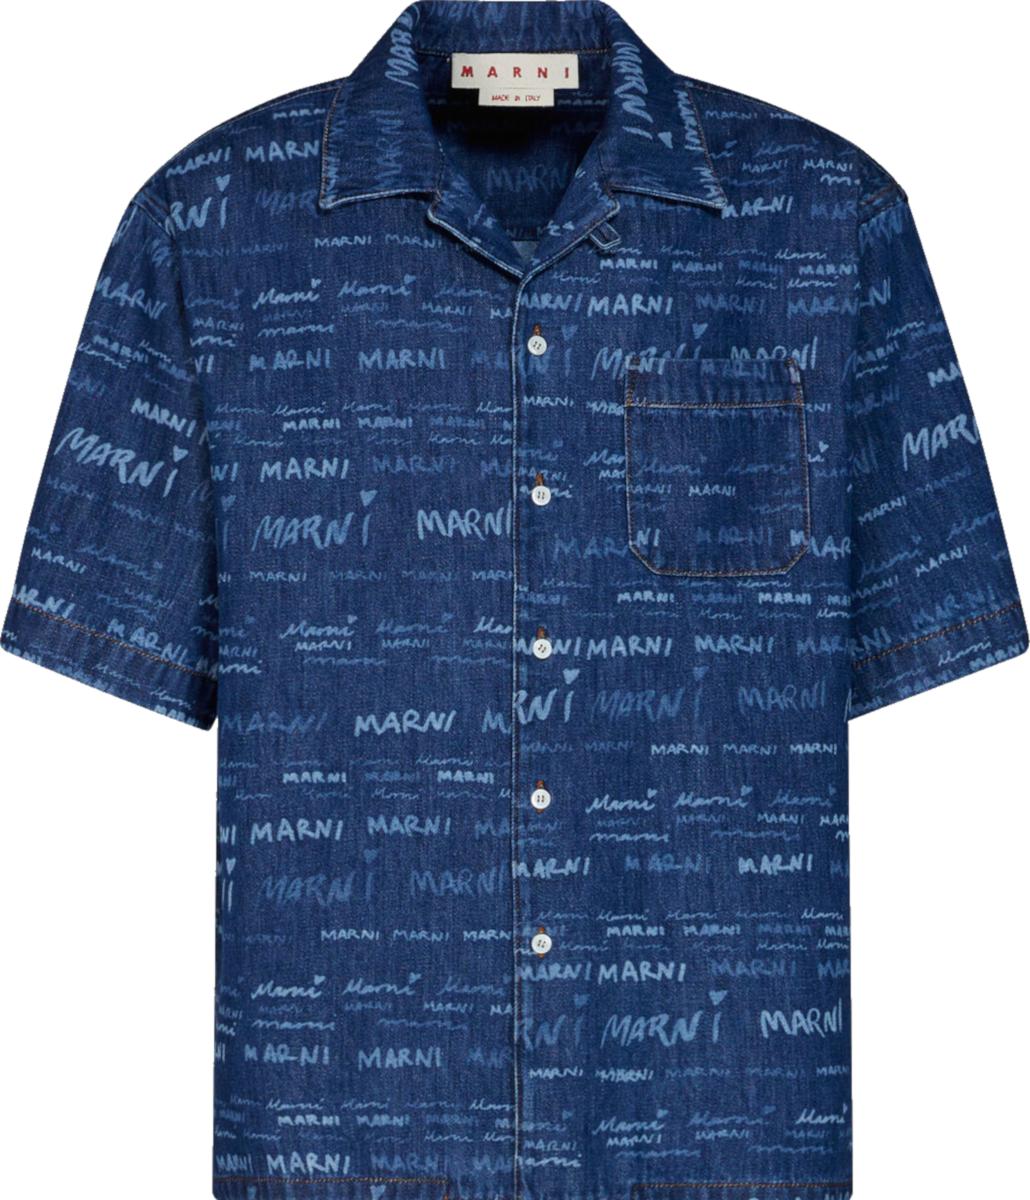 Marni Blue 'Mega Marni' Denim Shirt | INC STYLE